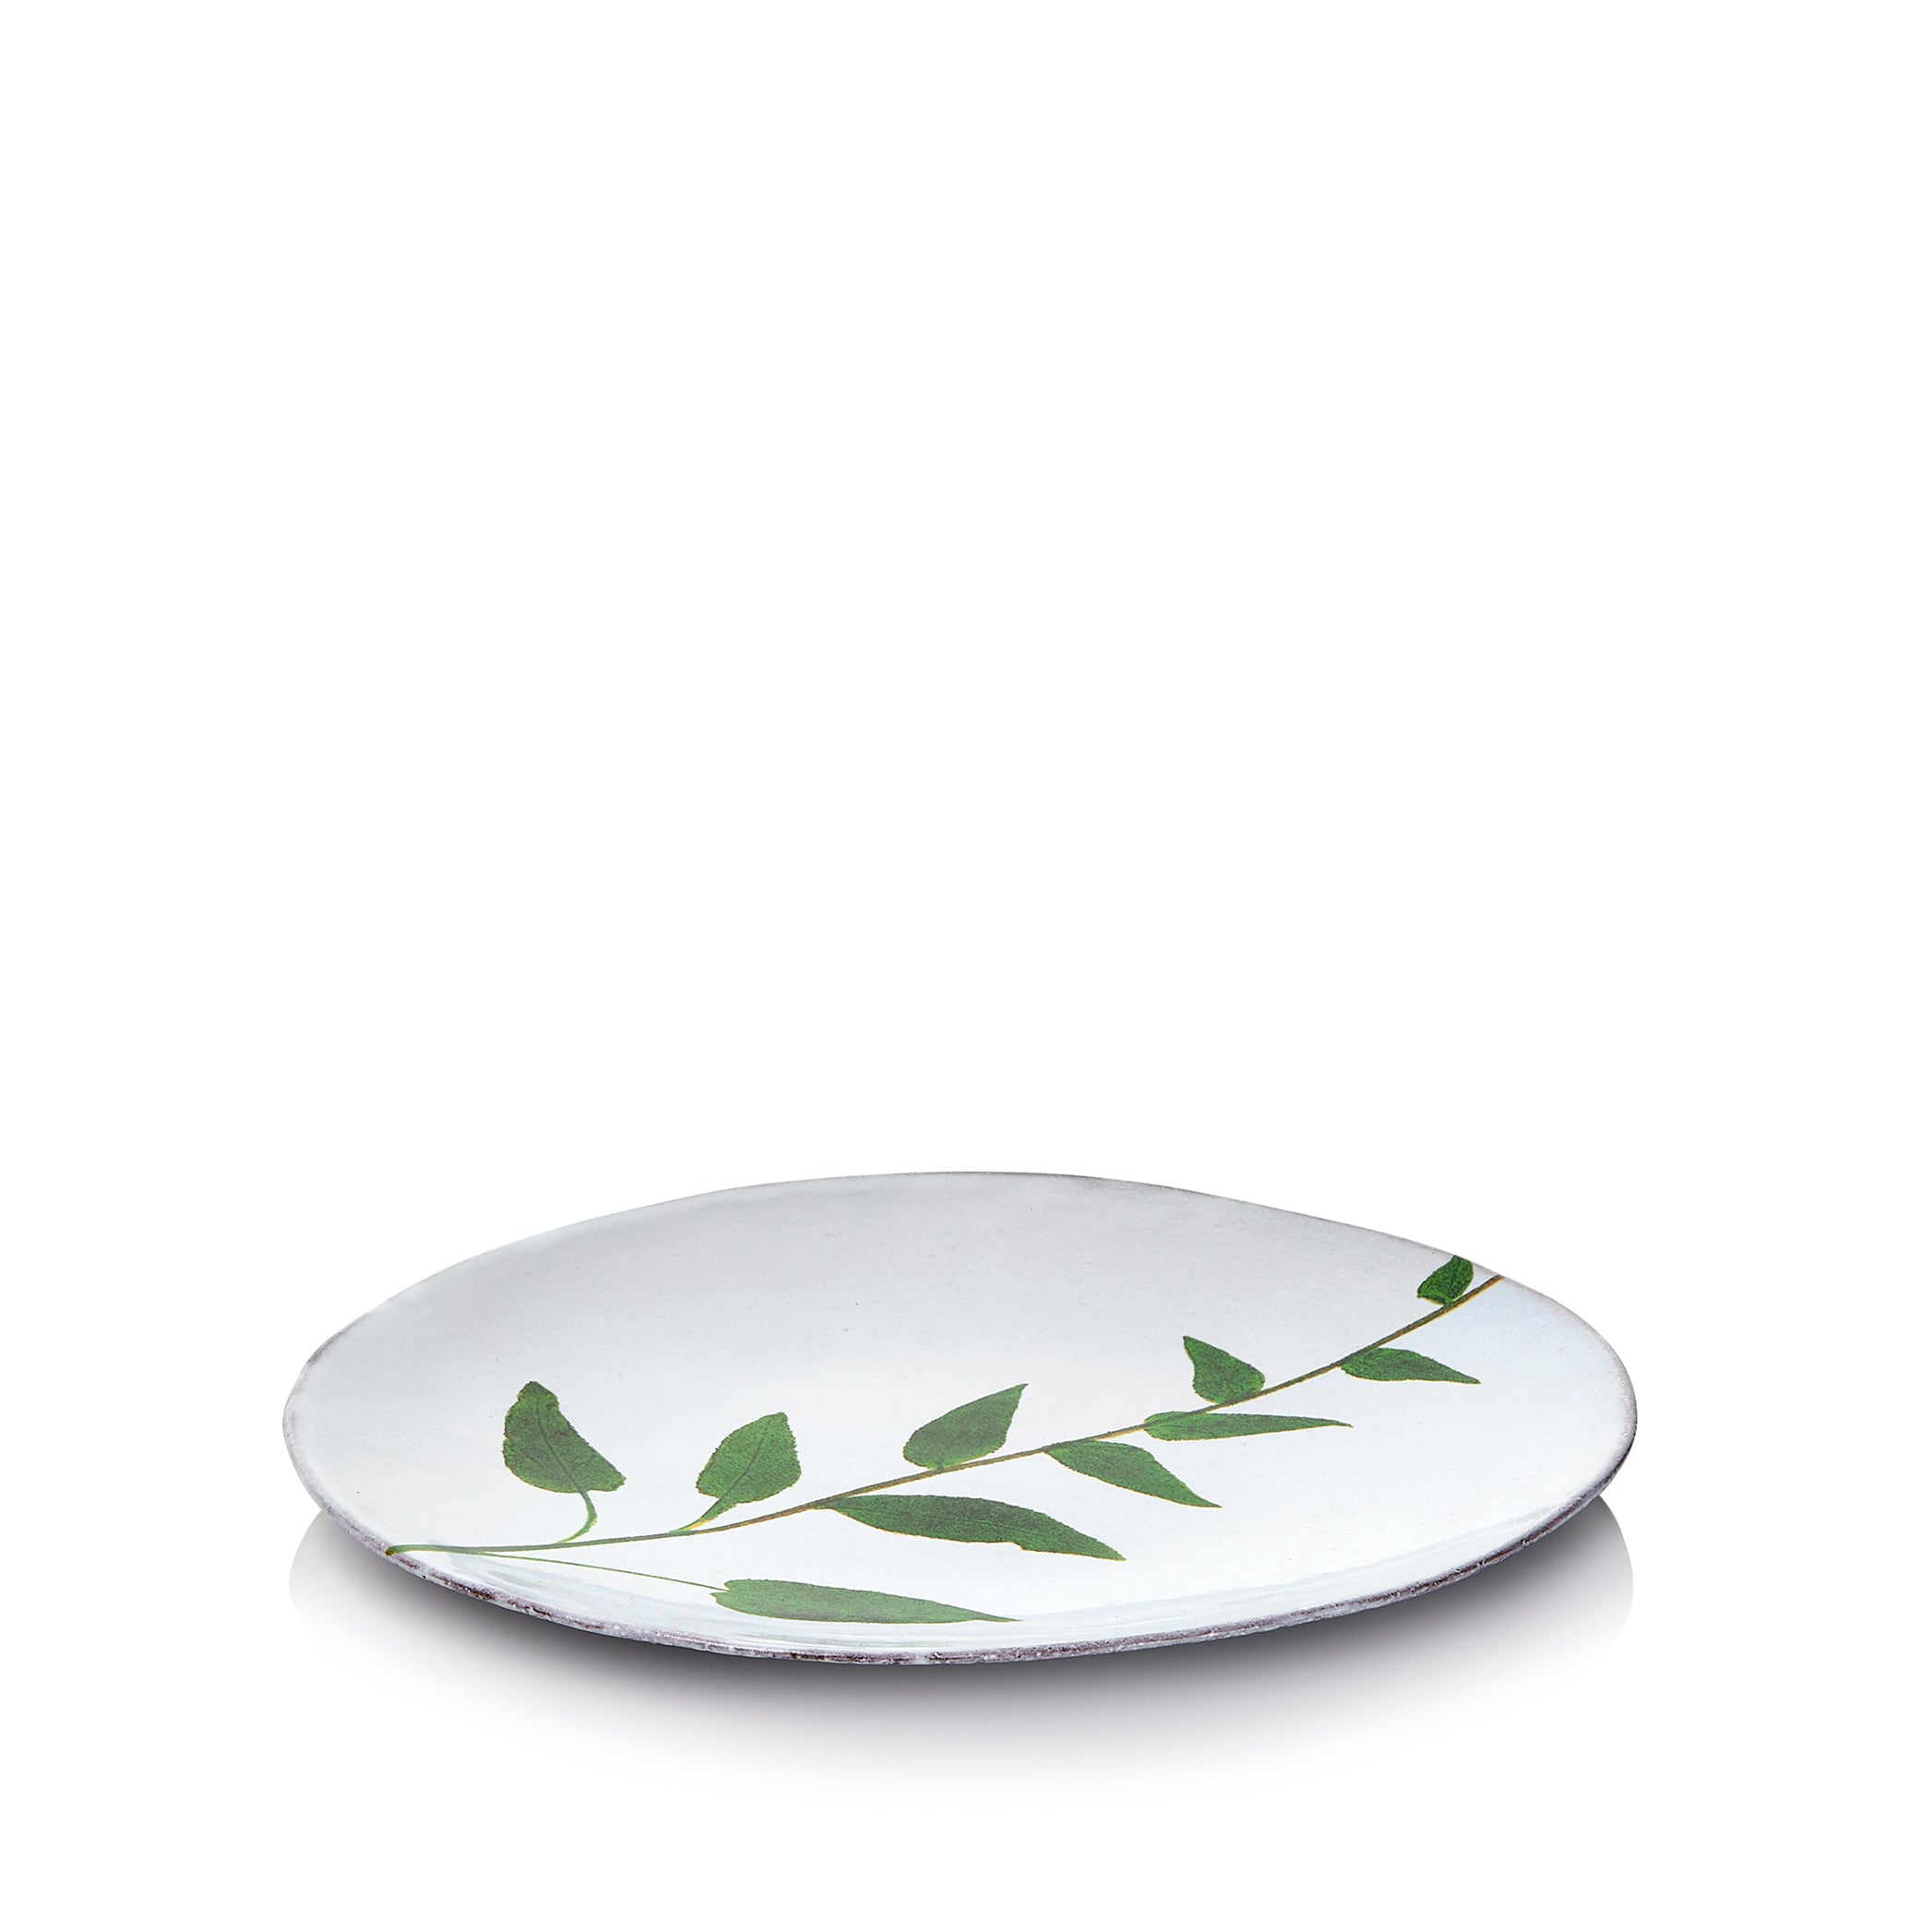 Campanula Leaf Plate by Astier de Villatte, 24cm